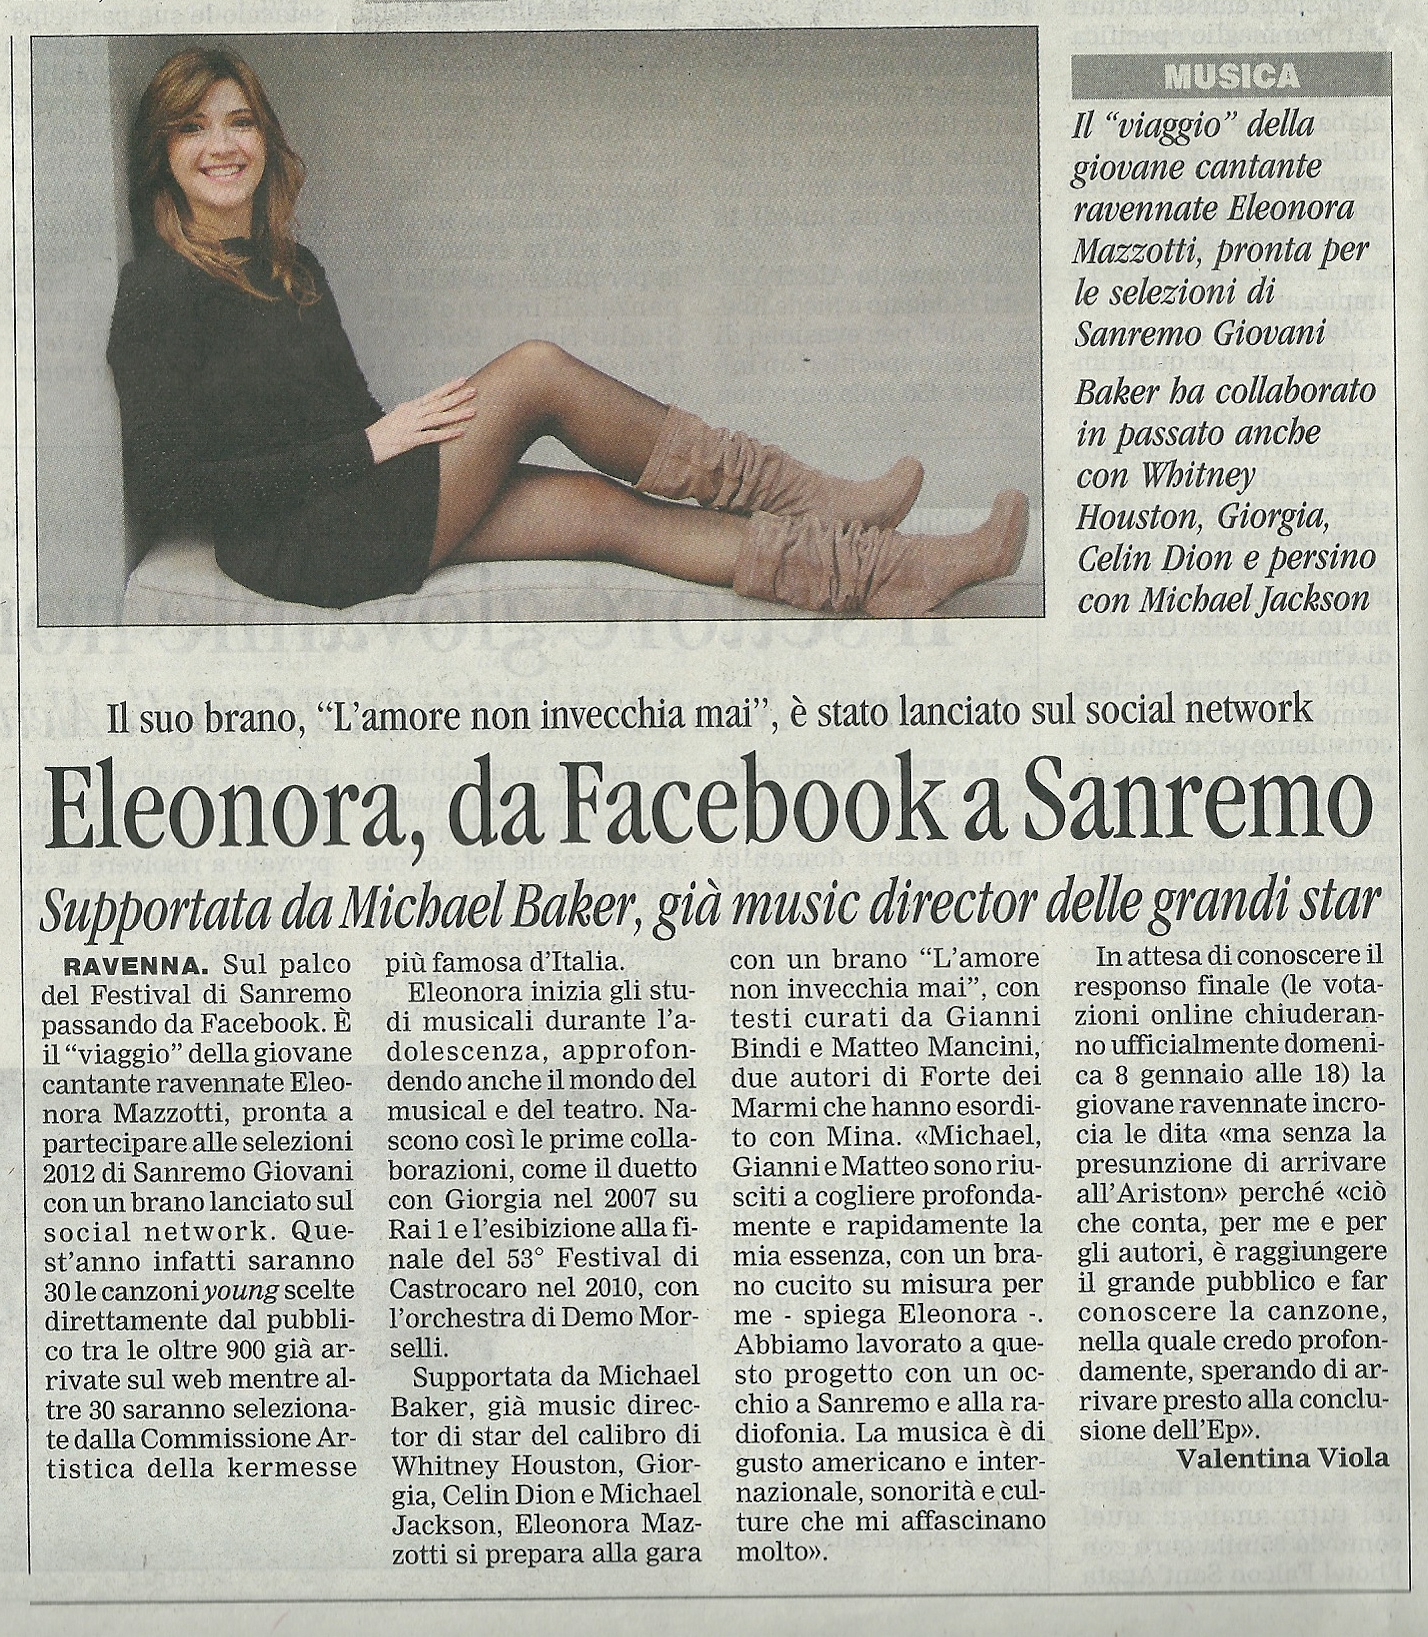 Corriere di Romagna, Ravenna, 5-1-2012